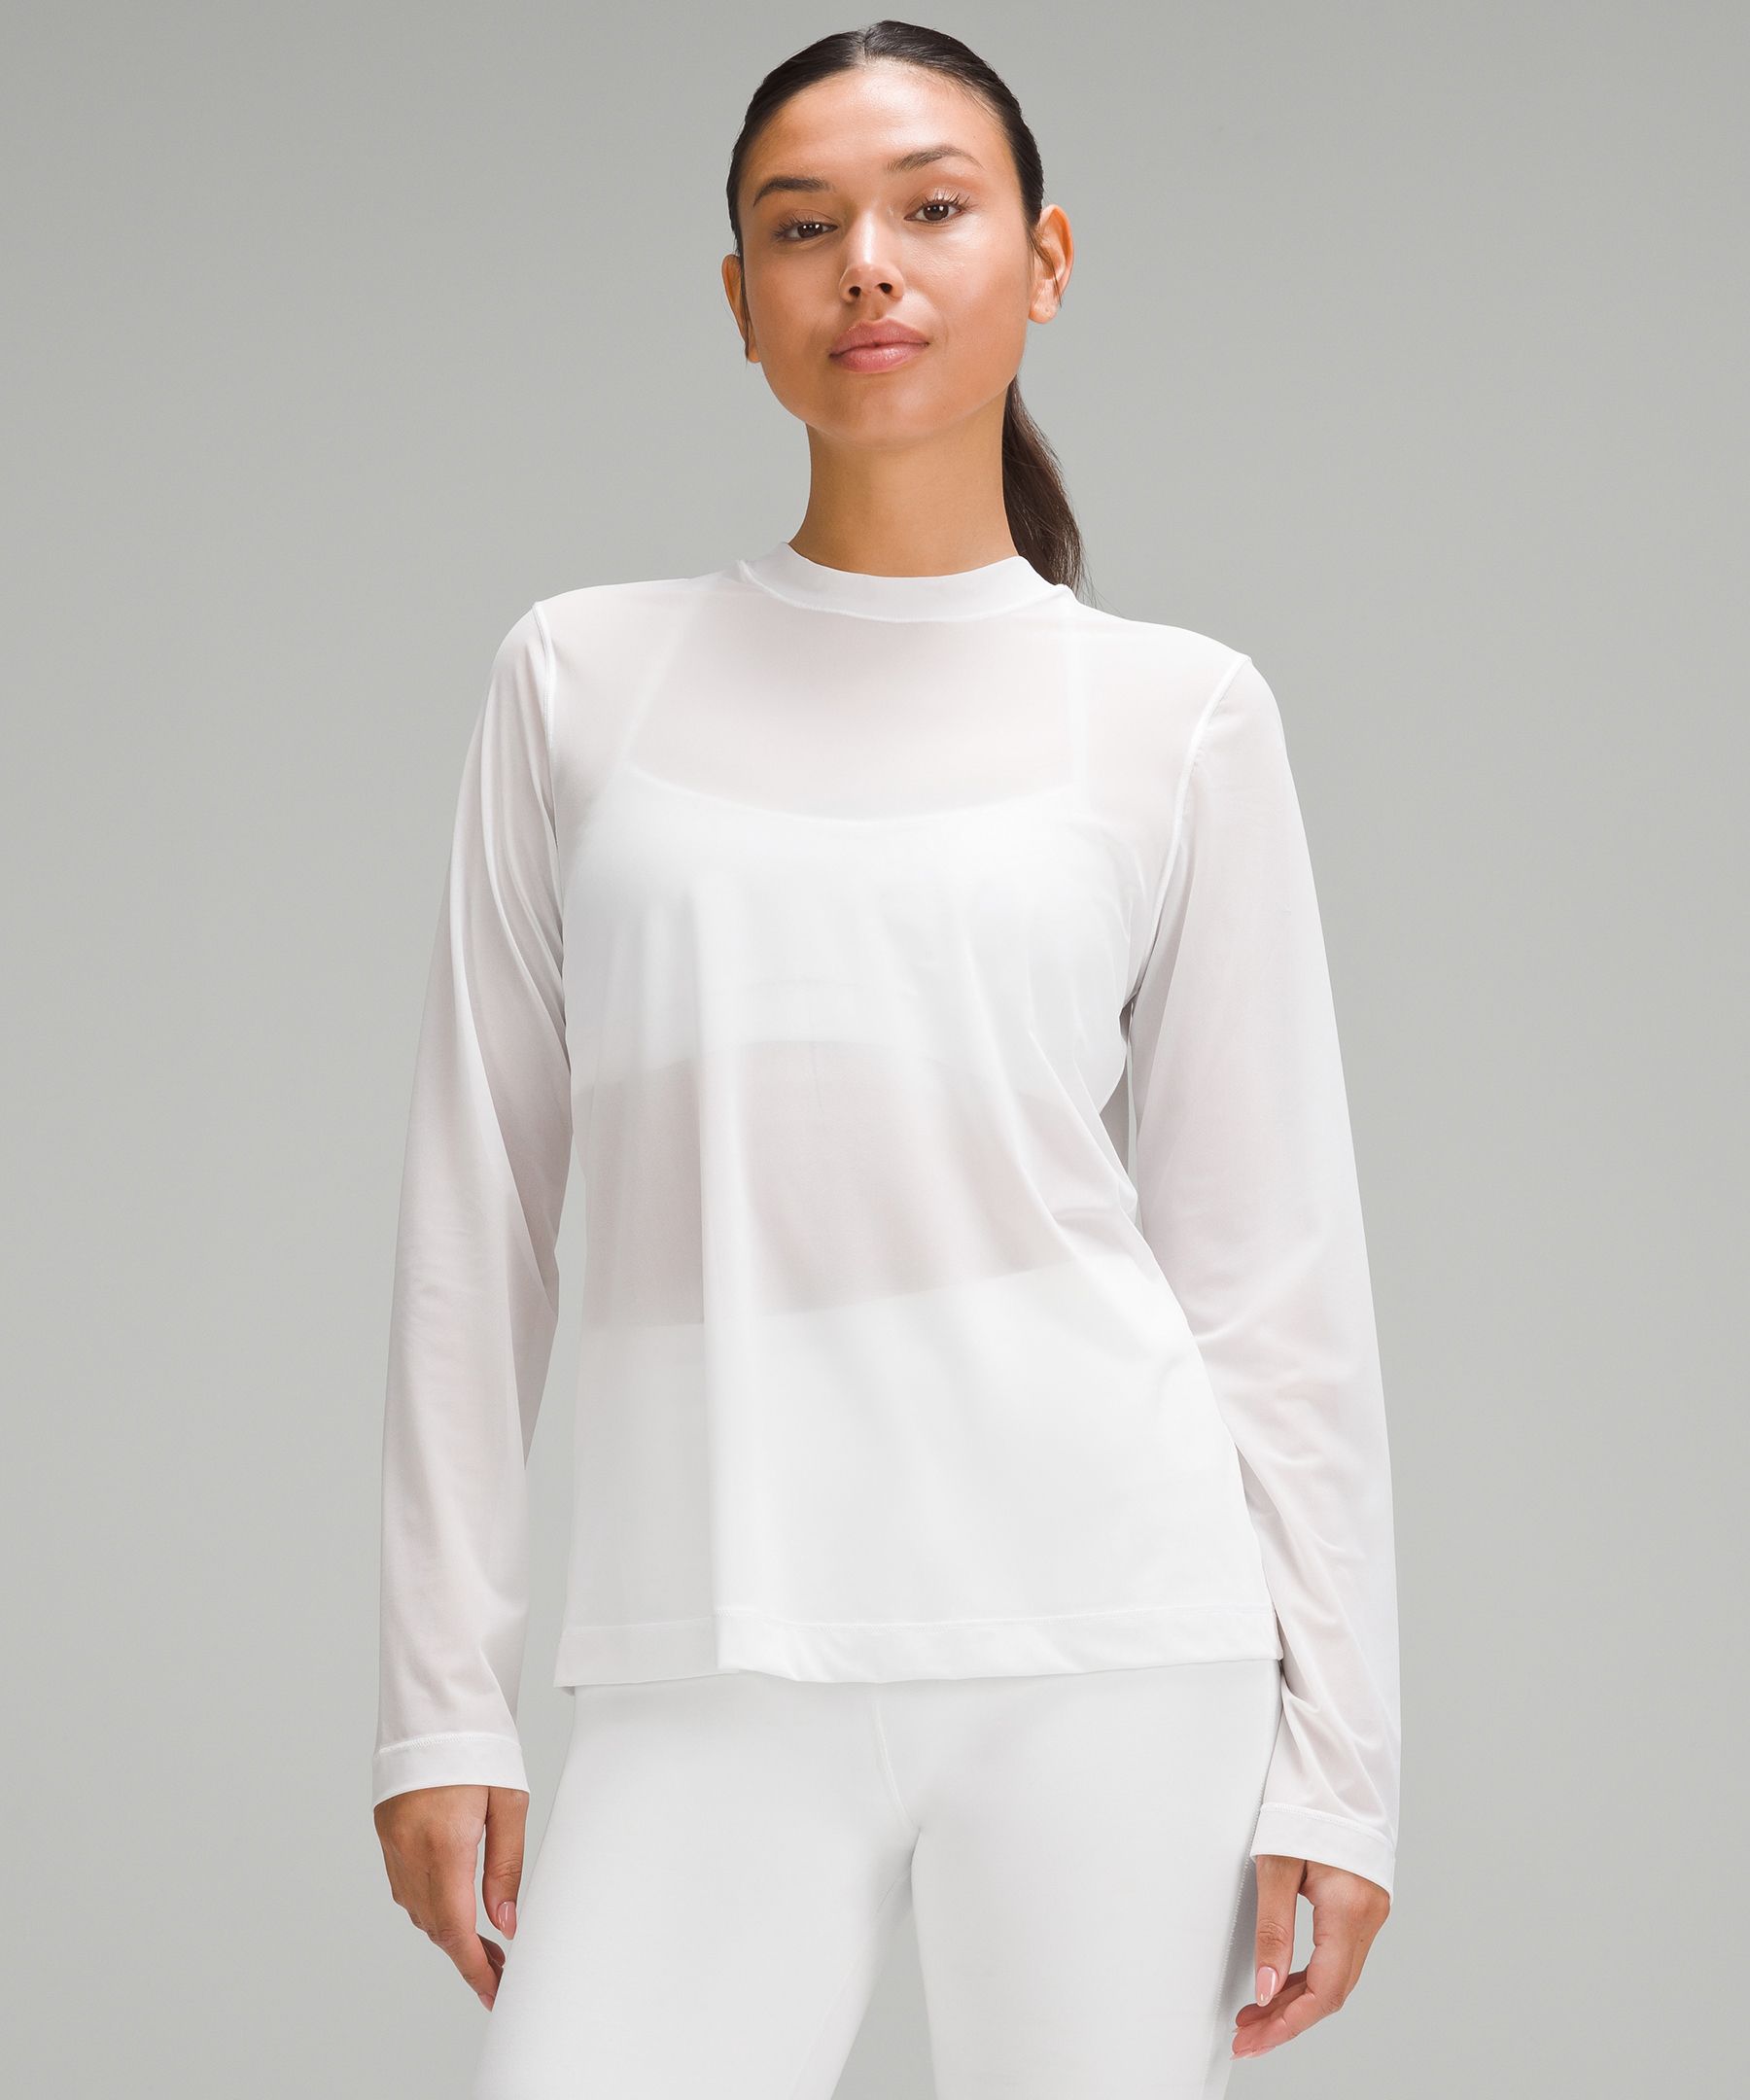 Lululemon Gray Shirt with Mesh Sleeves Women's Size M – MSU